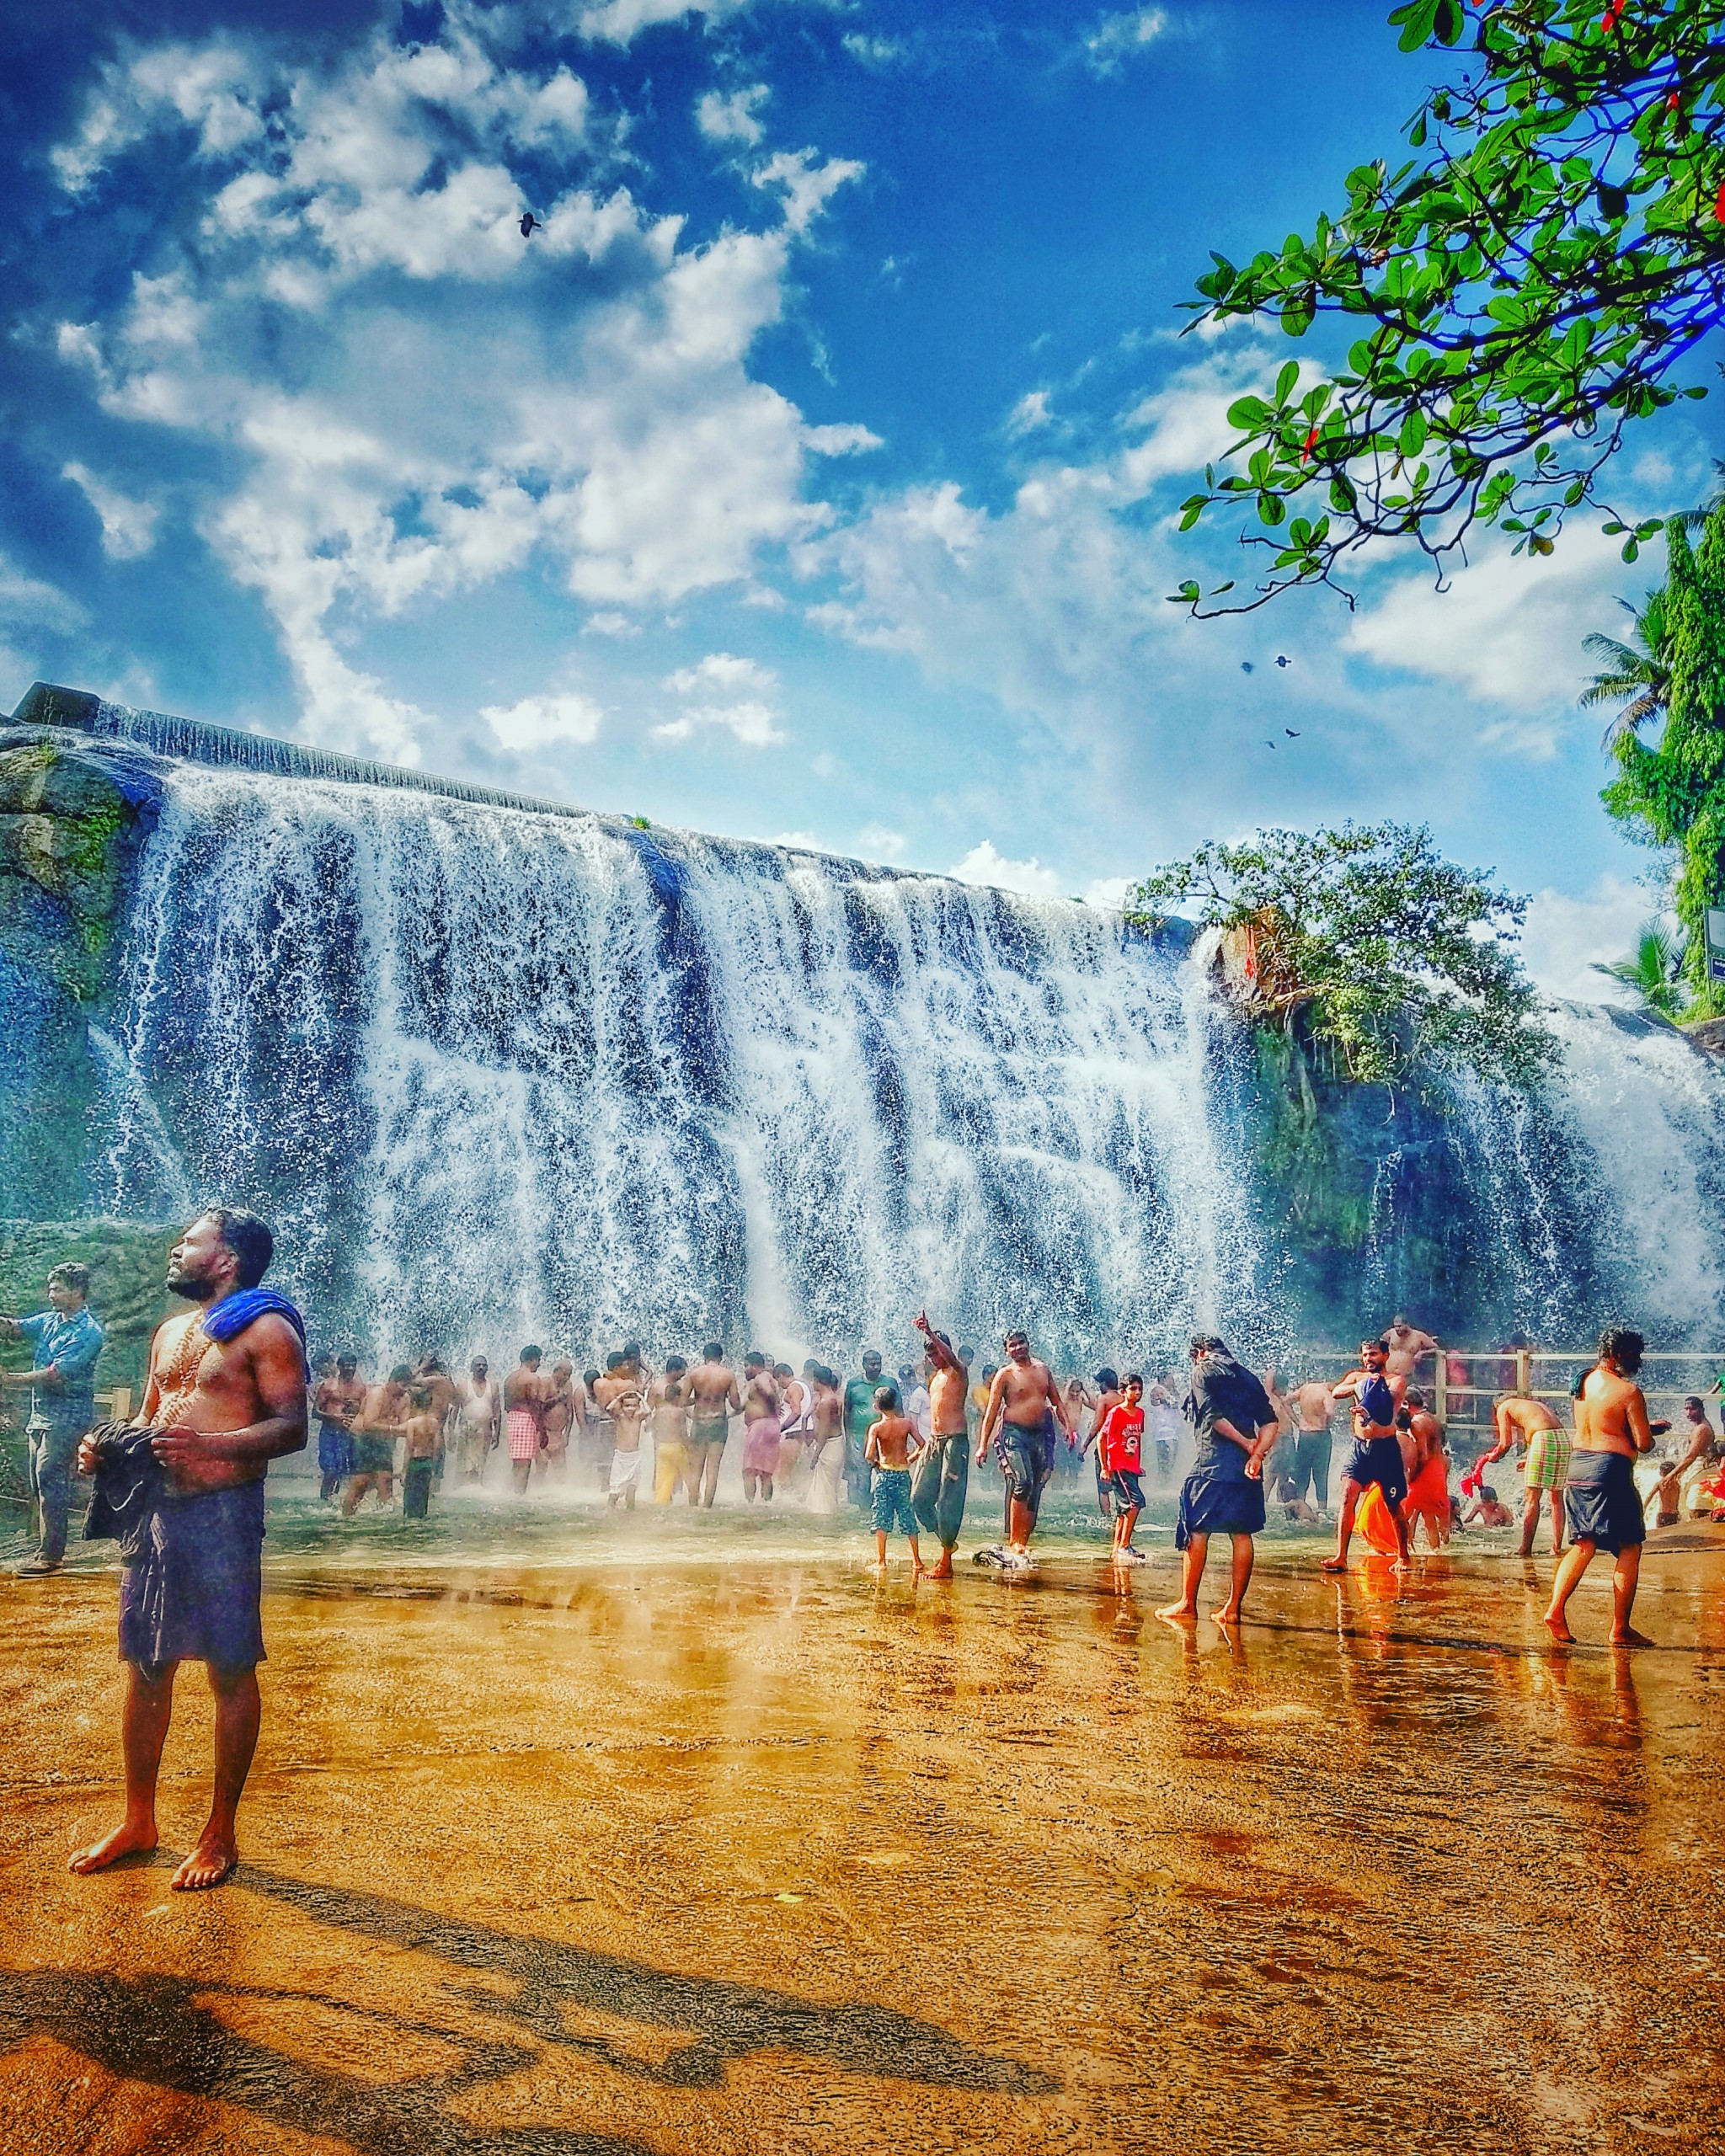 People bathing in the waterfall